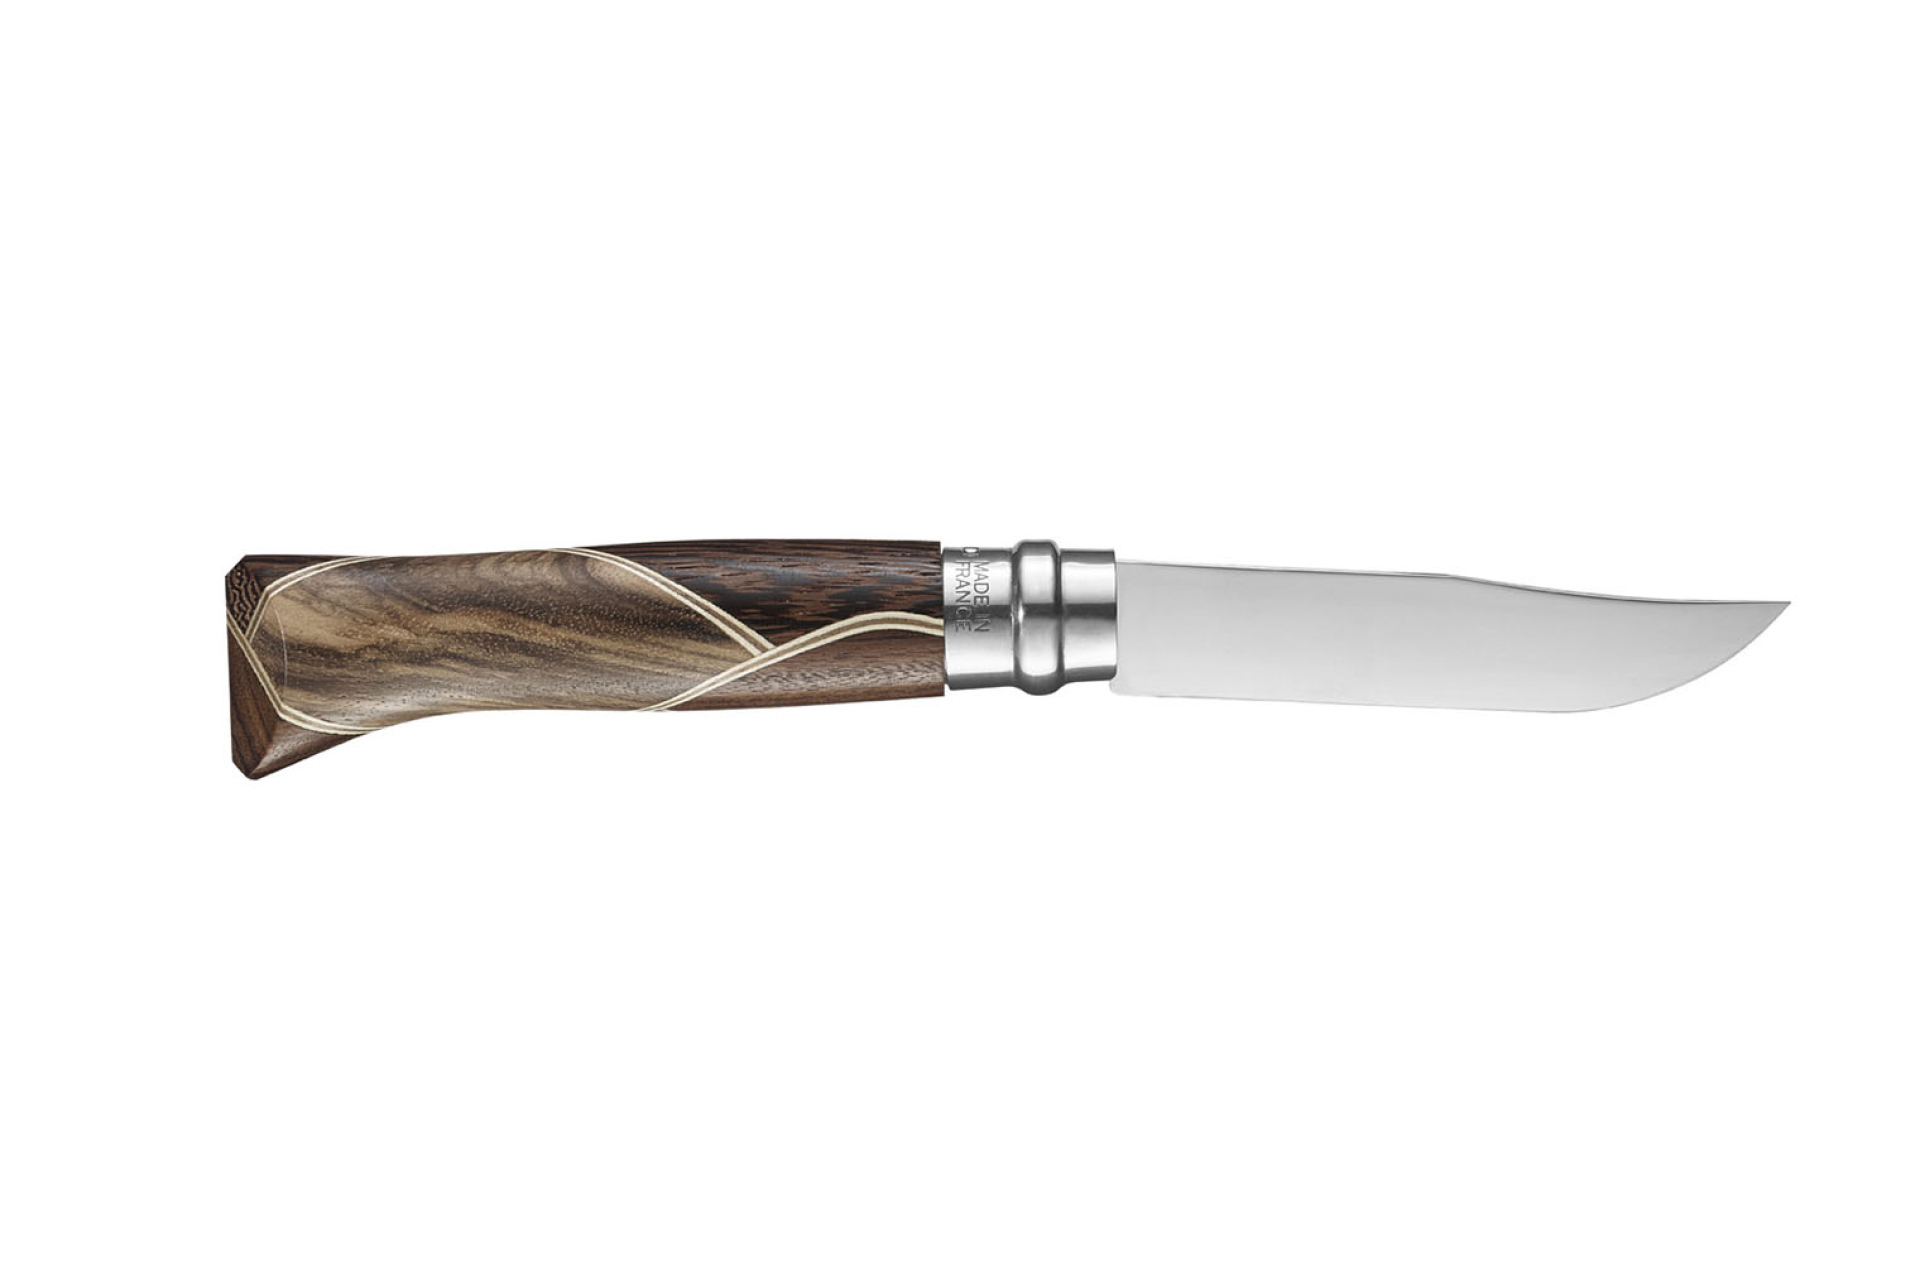 Couteau OPINEL Tradition Luxe N°8 manche en Noyer, lame 8.5cm - Le